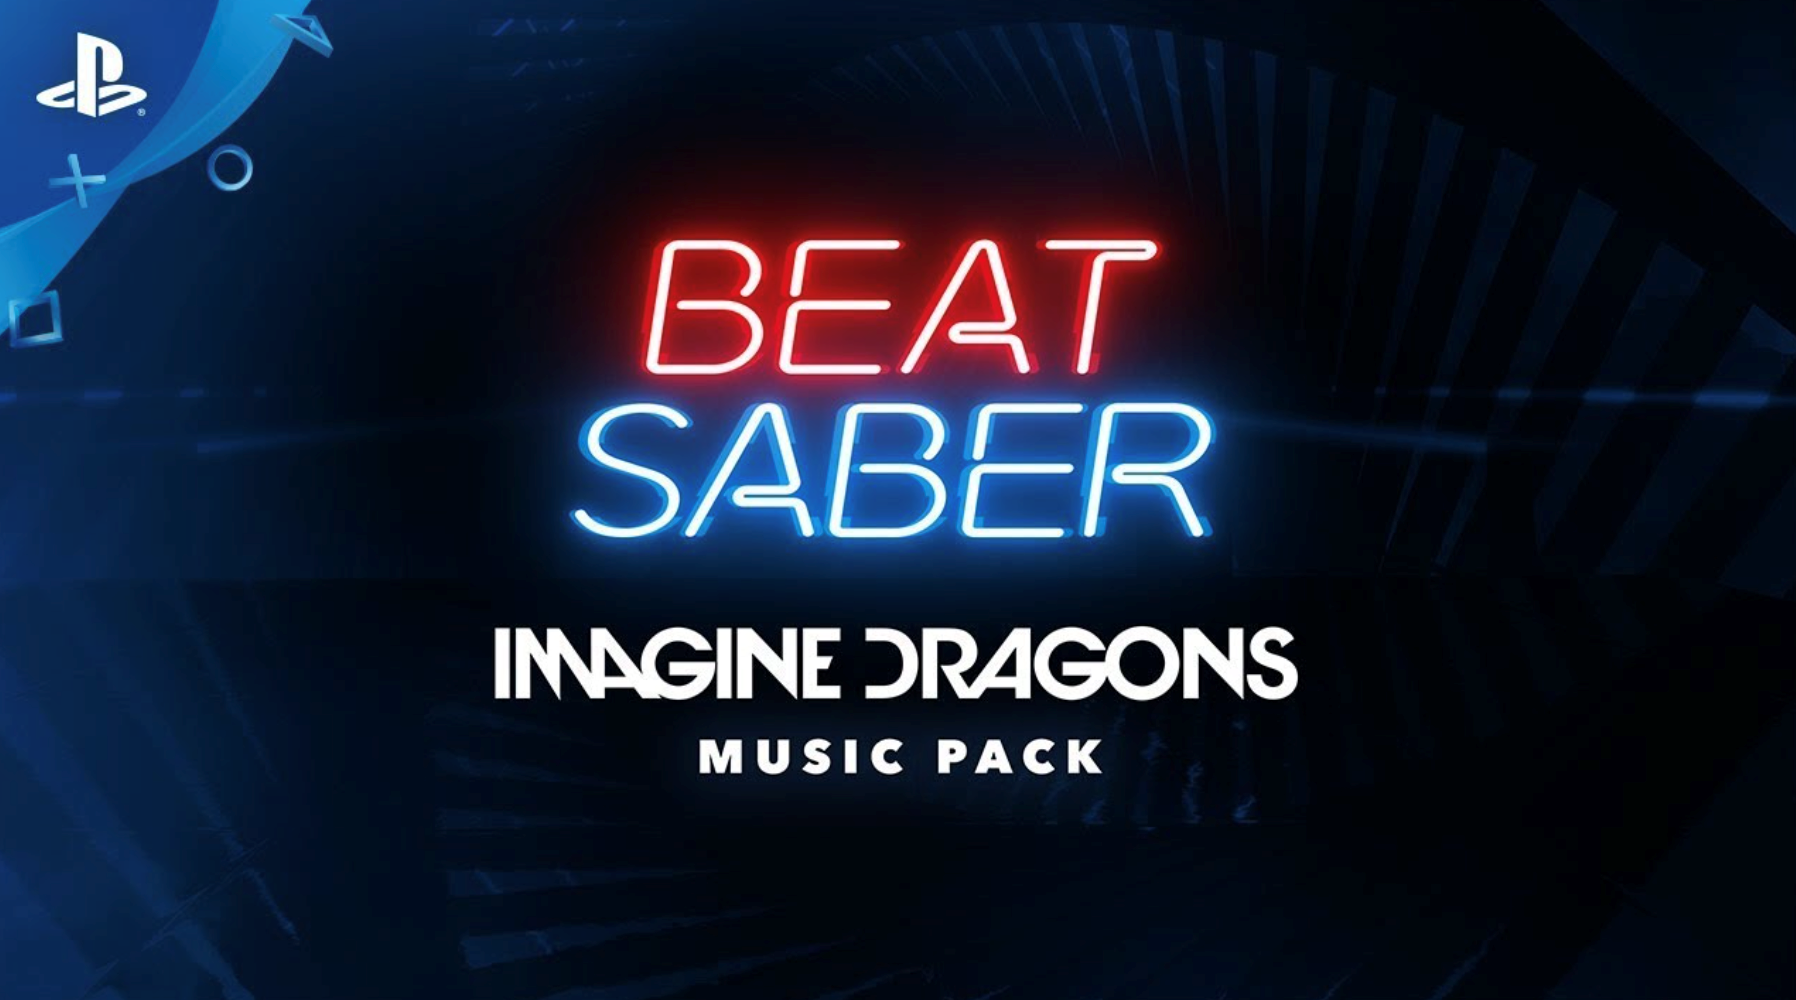 Beat saber + imagine Dragons Music Pack ps4. Beat the Dragon. Beat saber imagine Dragons Expert Plus. Saber ps4